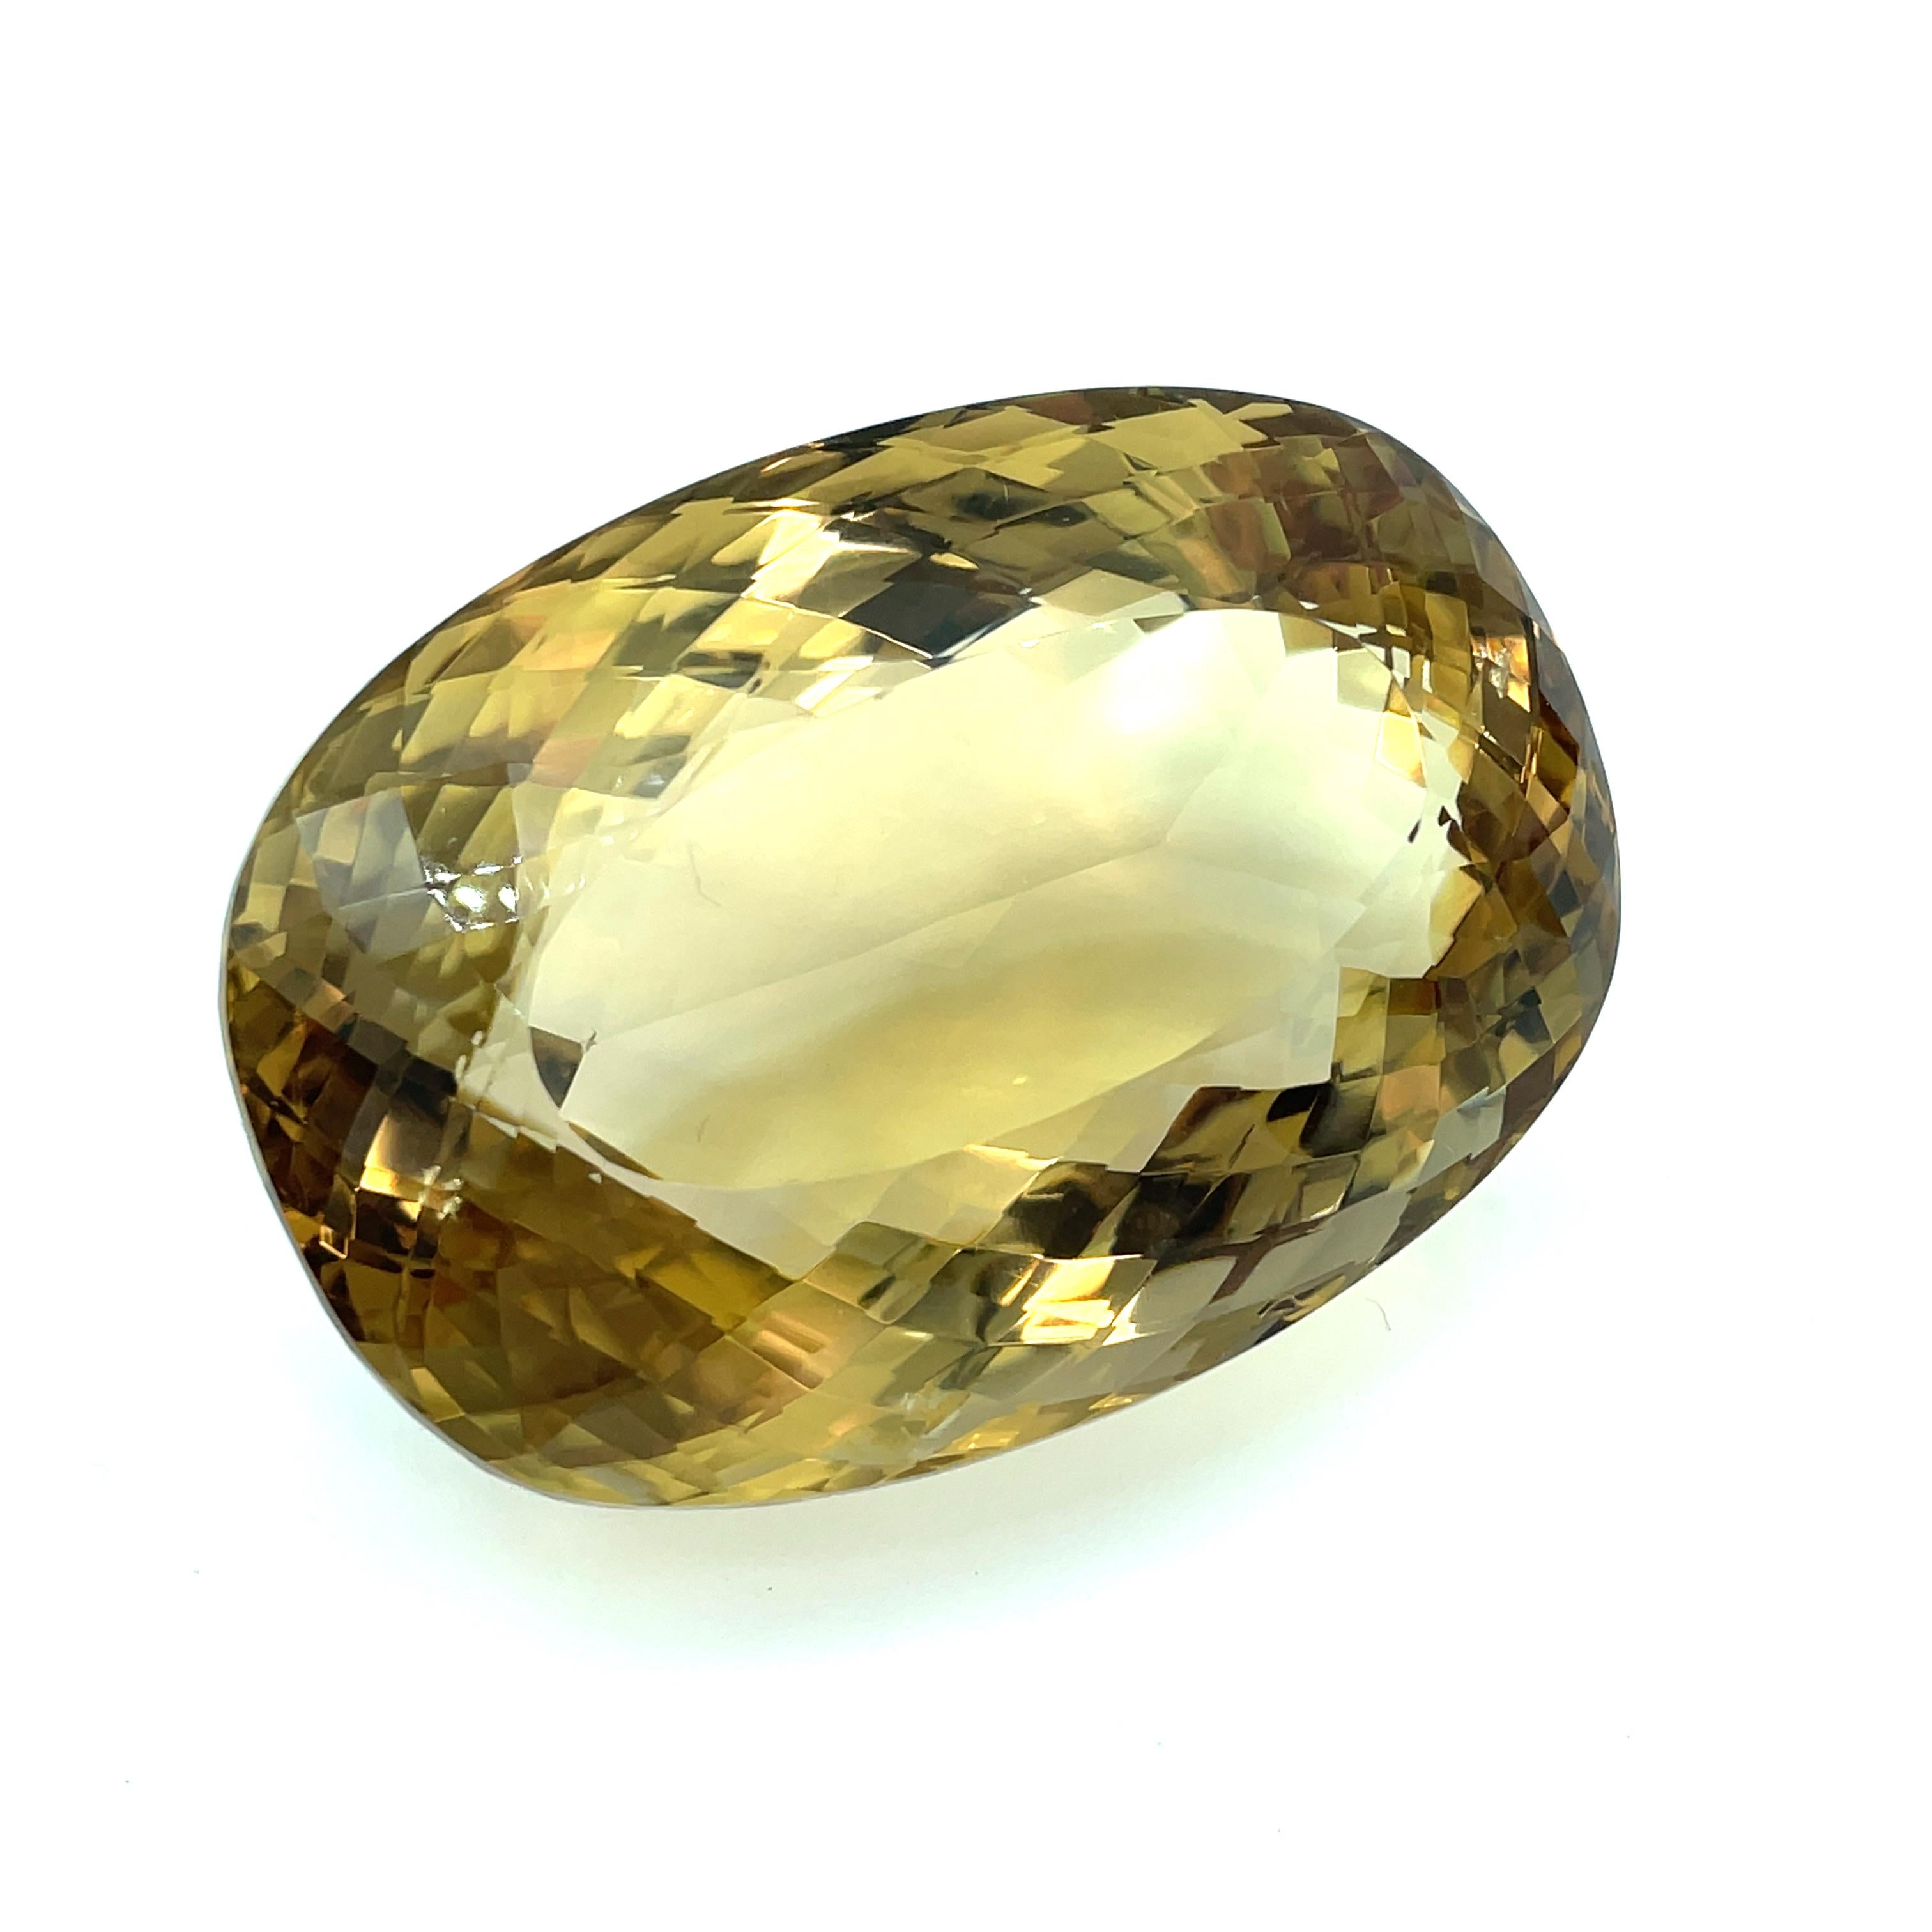 Taille ovale 1058 Carat Oval Faceted Smoky Quartz Collector Gemstone (pierre précieuse de collection)   en vente